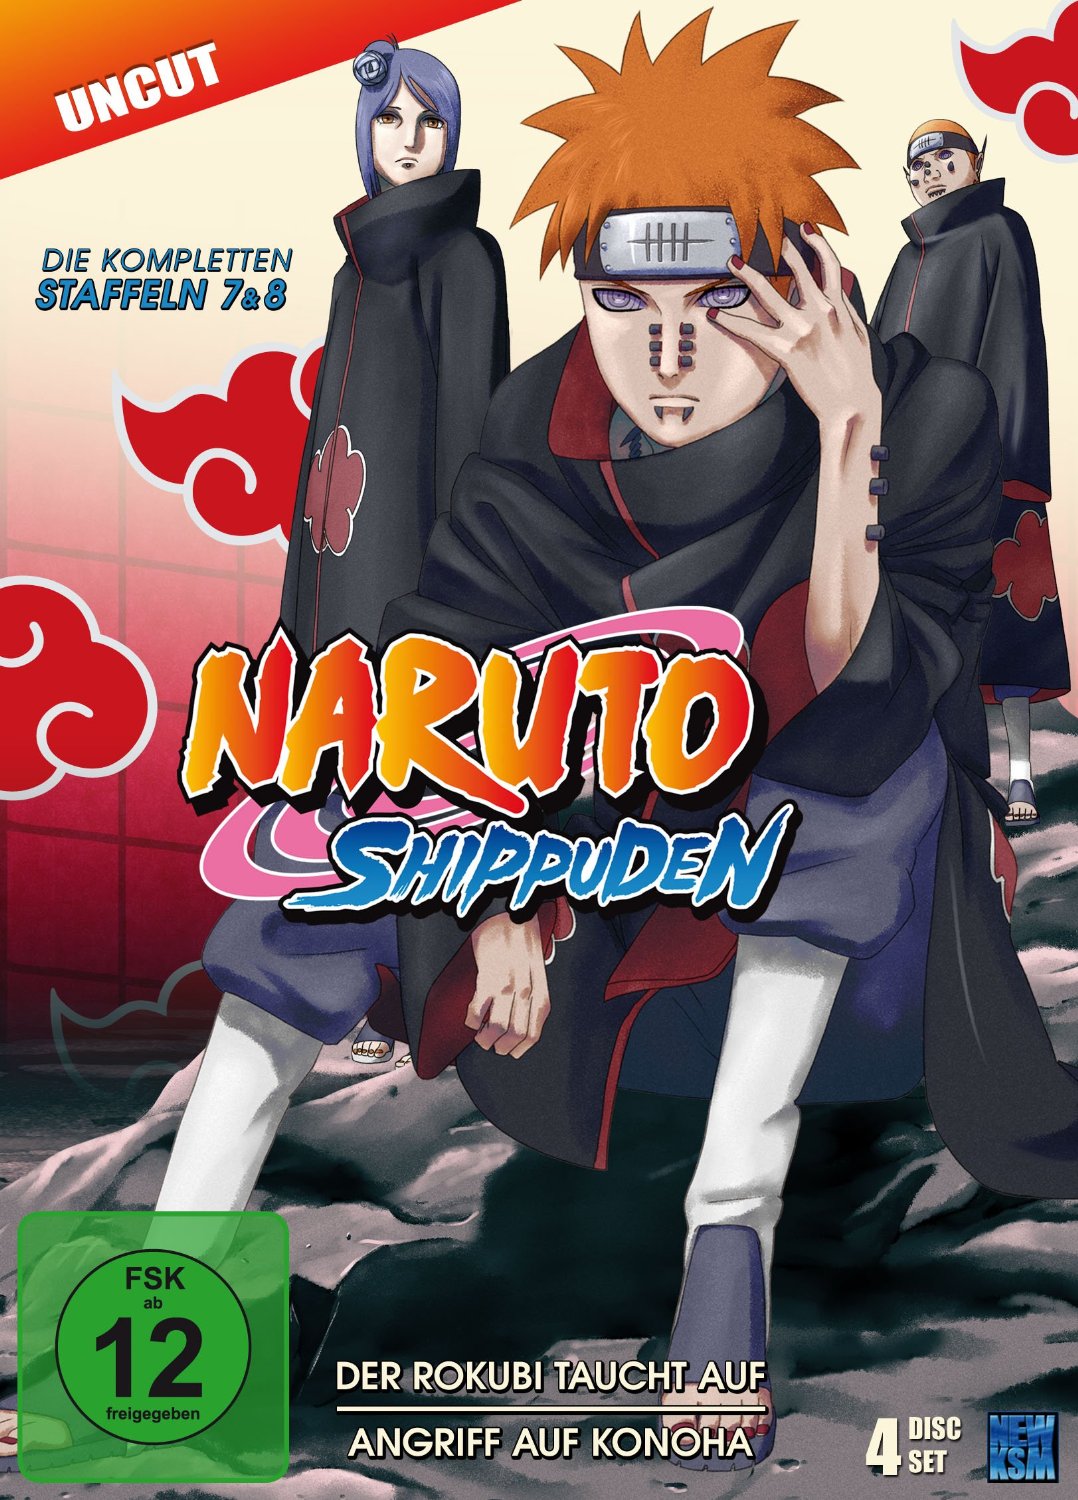 Naruto Shippuden - Staffel 7+8 : Episode 364-395 (uncut) [DVD] Cover